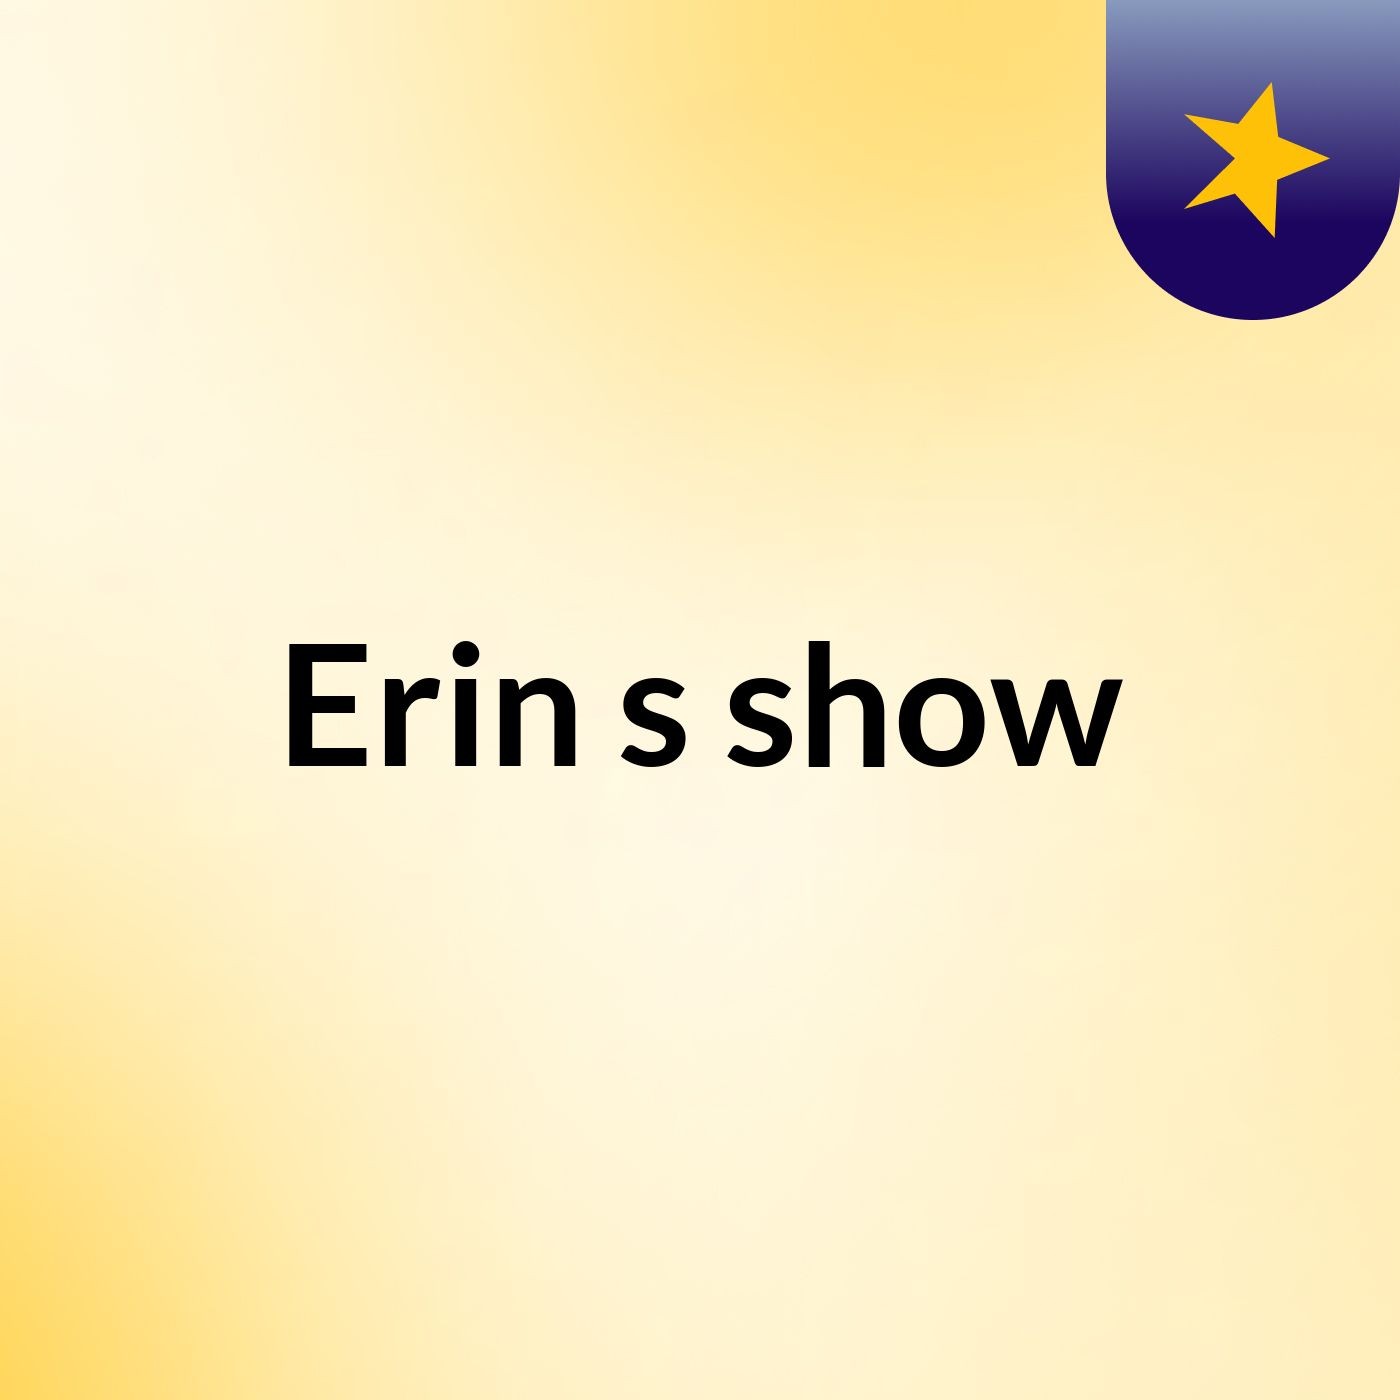 Erin's show